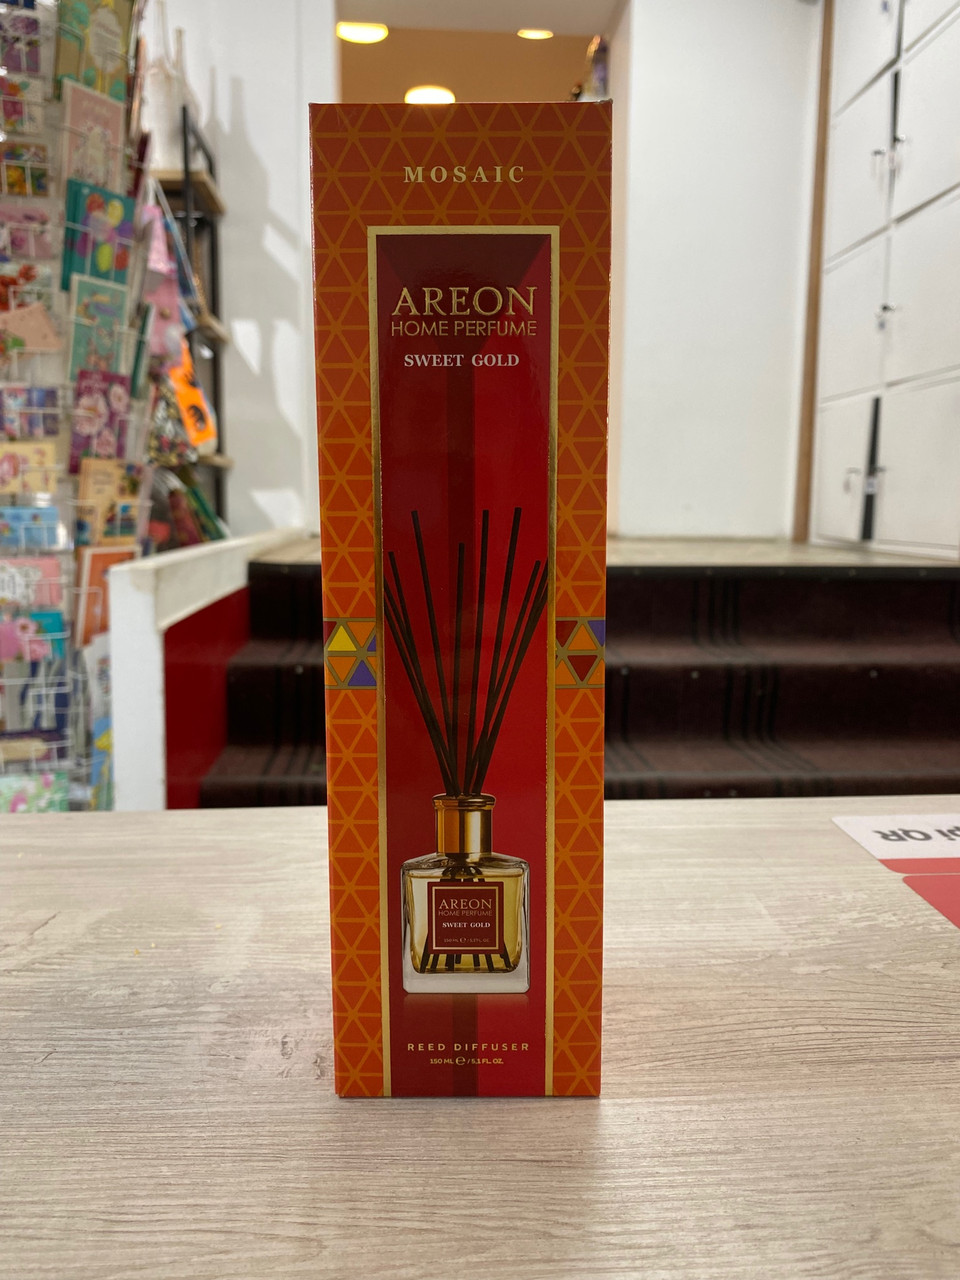 Areon ароматизатор для дома серия Mosaic парфюмированная 150 мл Sweet Gold